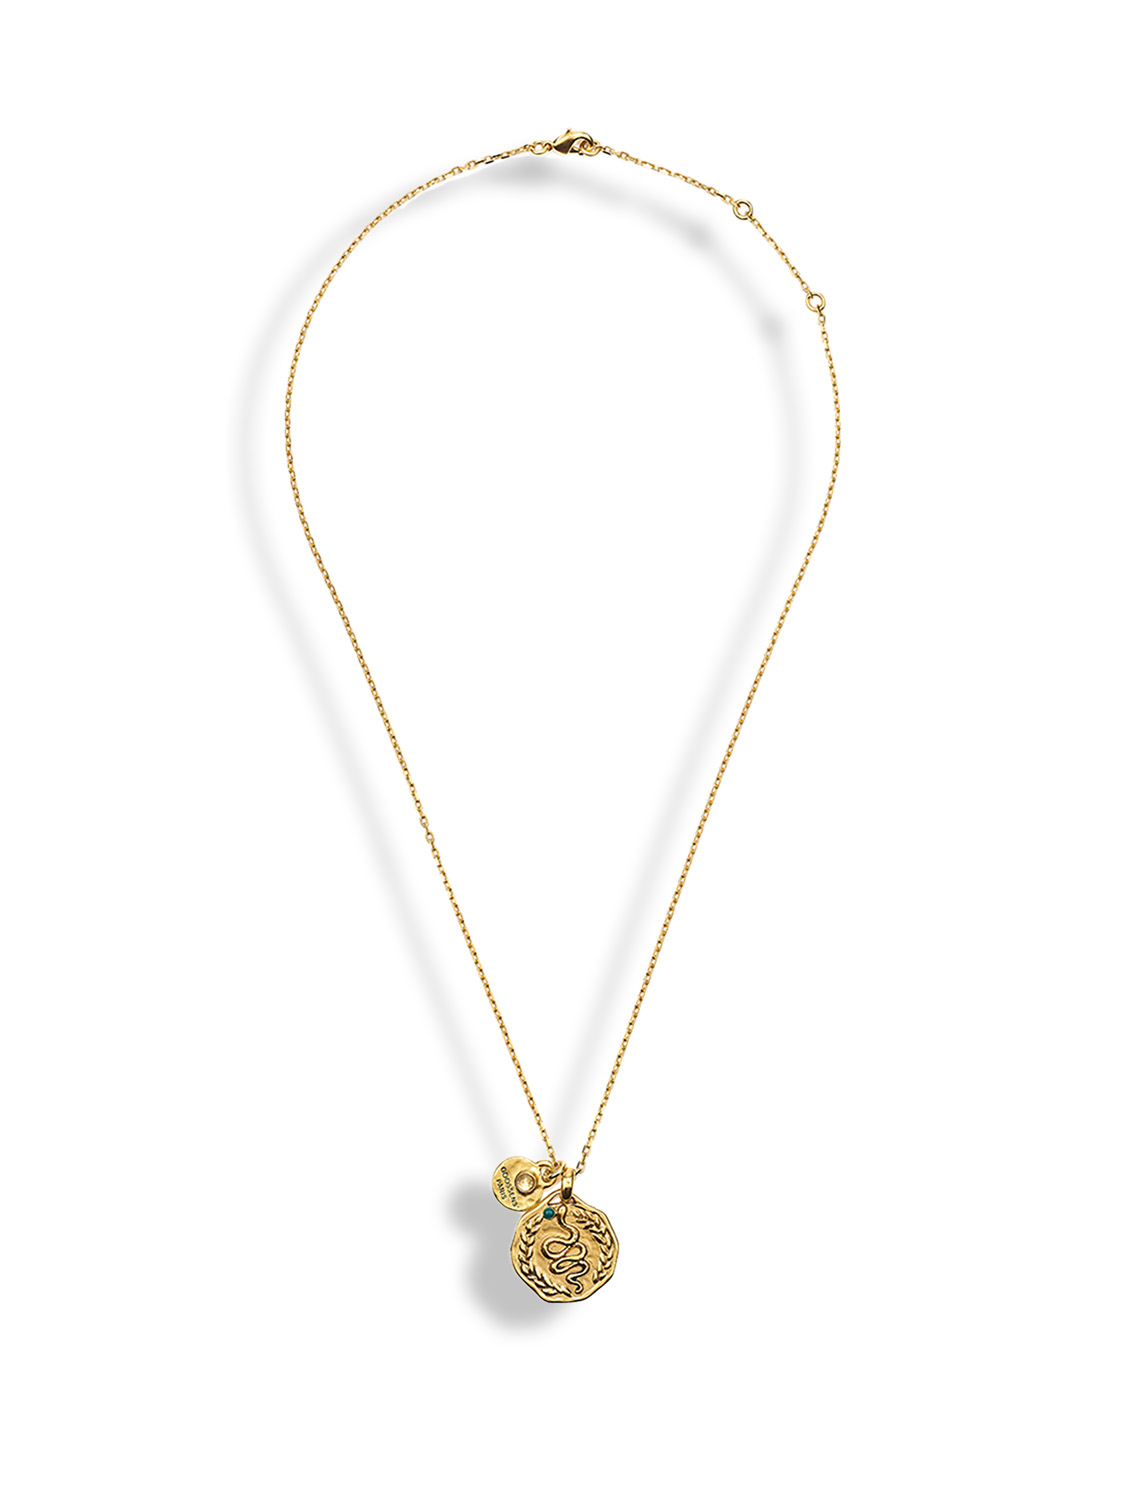 Carthage laurel serpent medal - necklace with talisman pendant